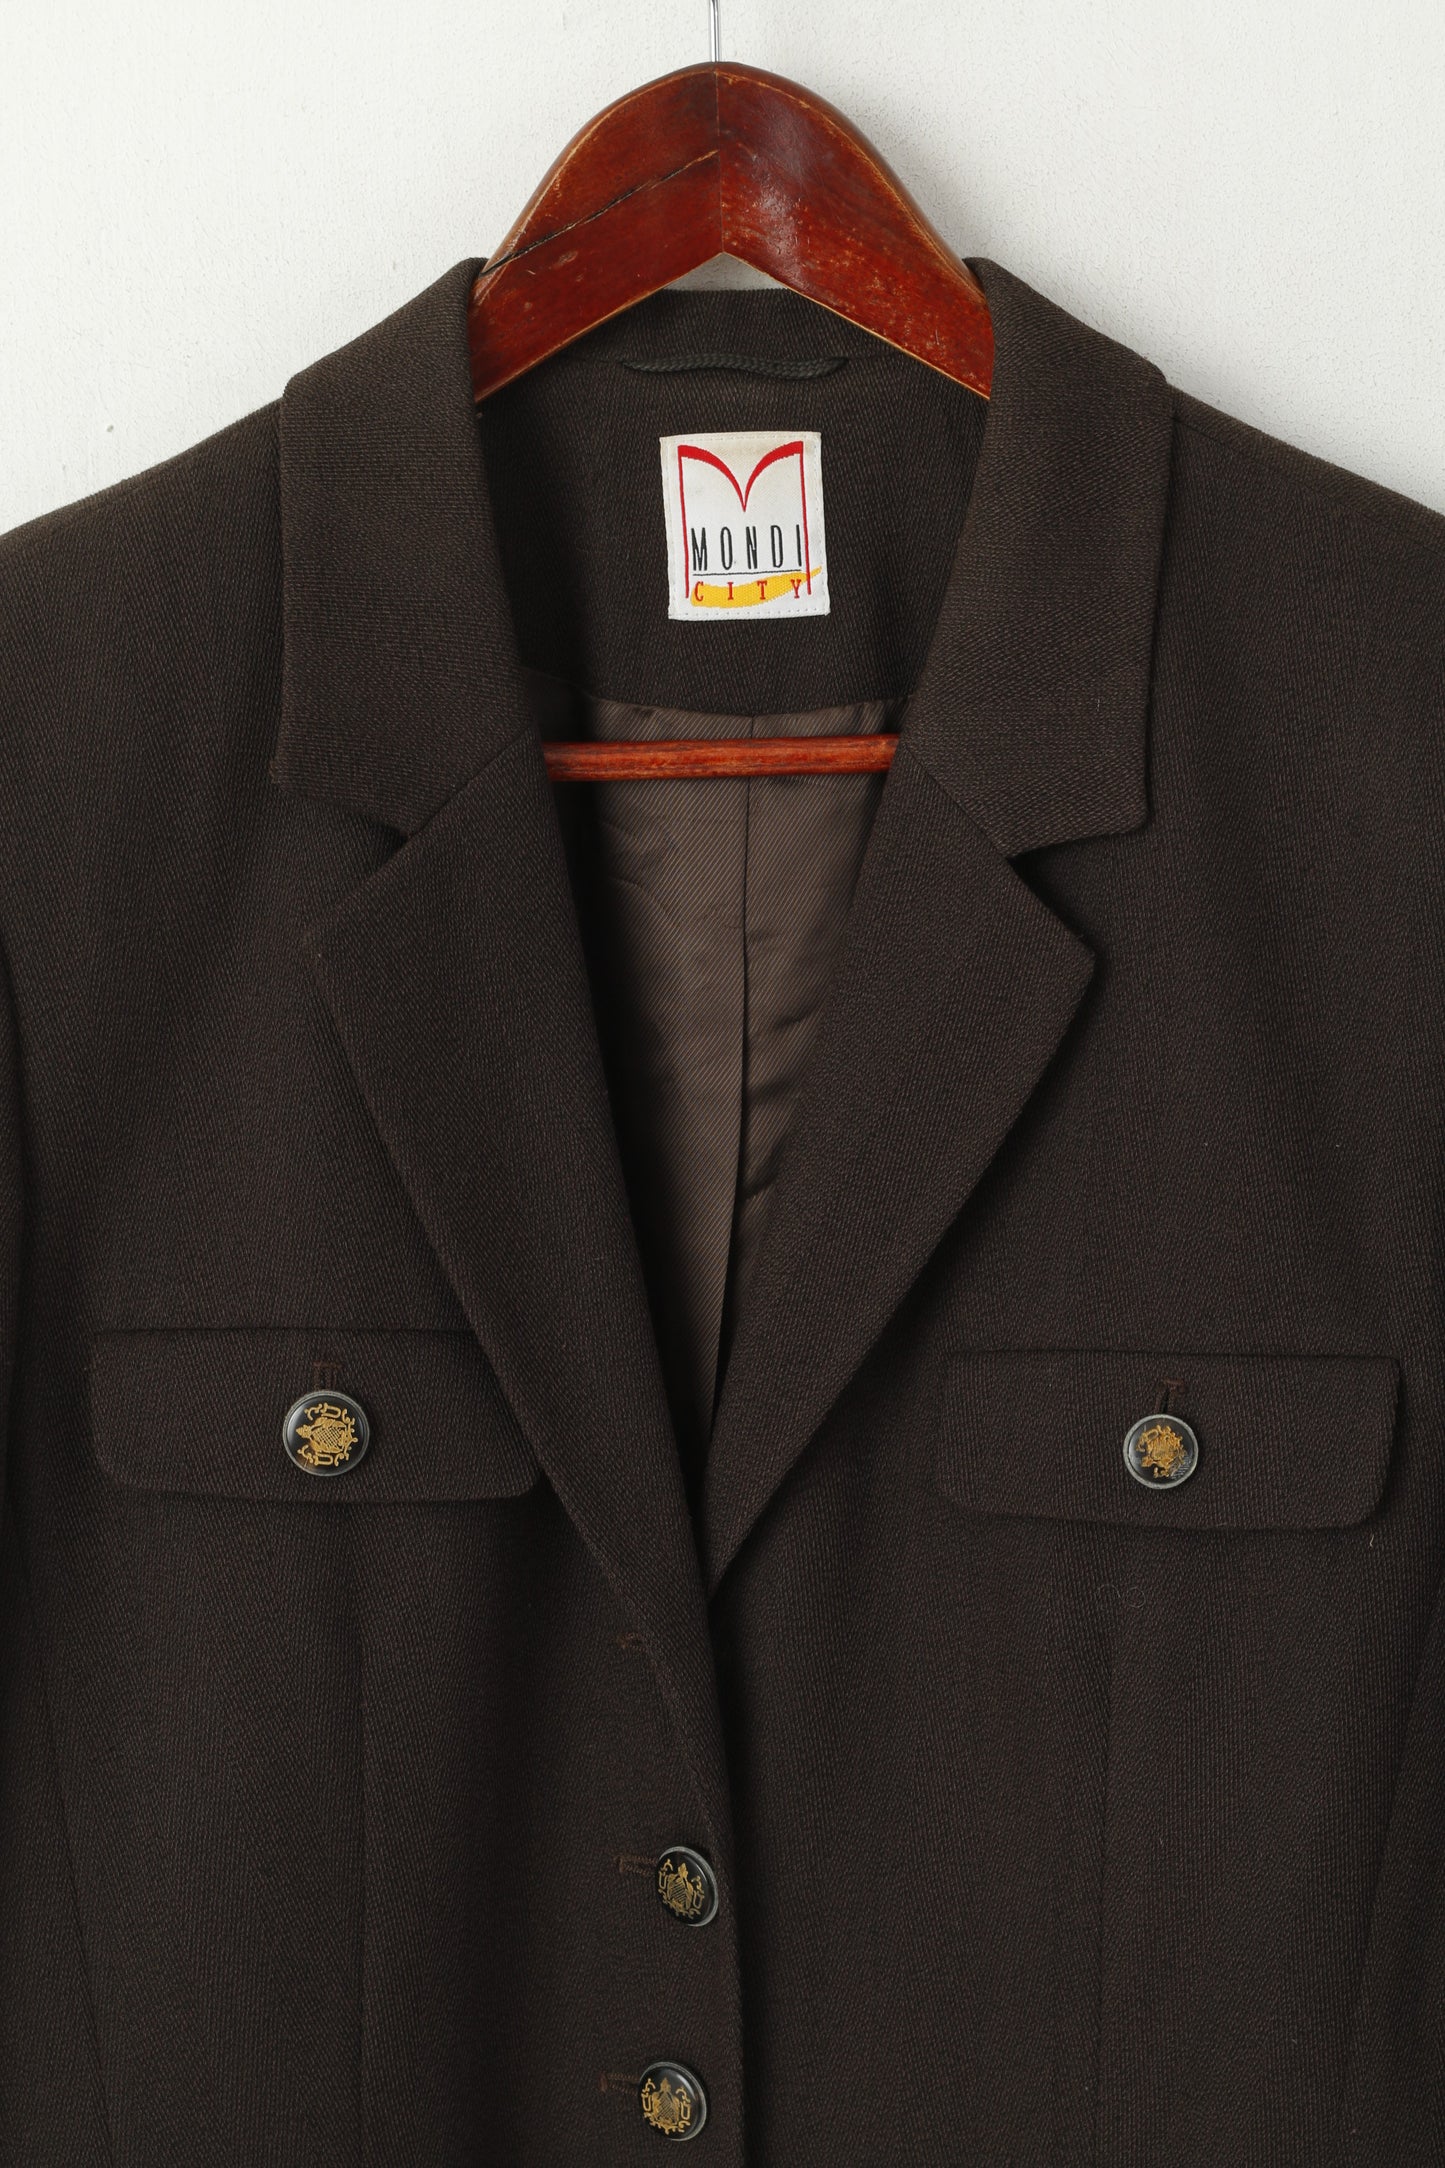 Mondi City Women 38 S Blazer Brown Wool Blend Casual Military Elegant Jacket